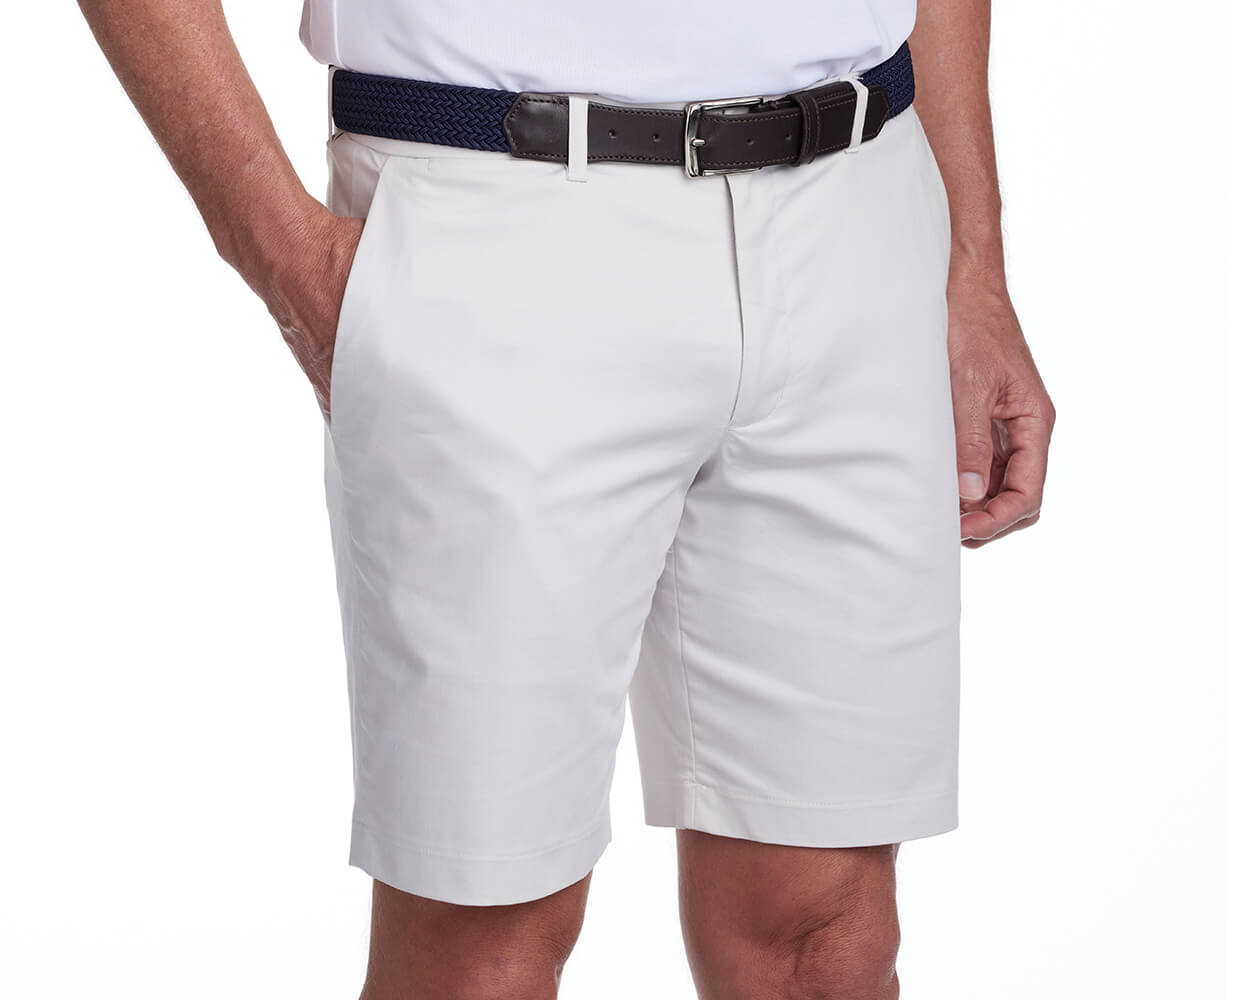 Front shot of Holderness and Bourne khaki golf shorts modeled on man's legs.